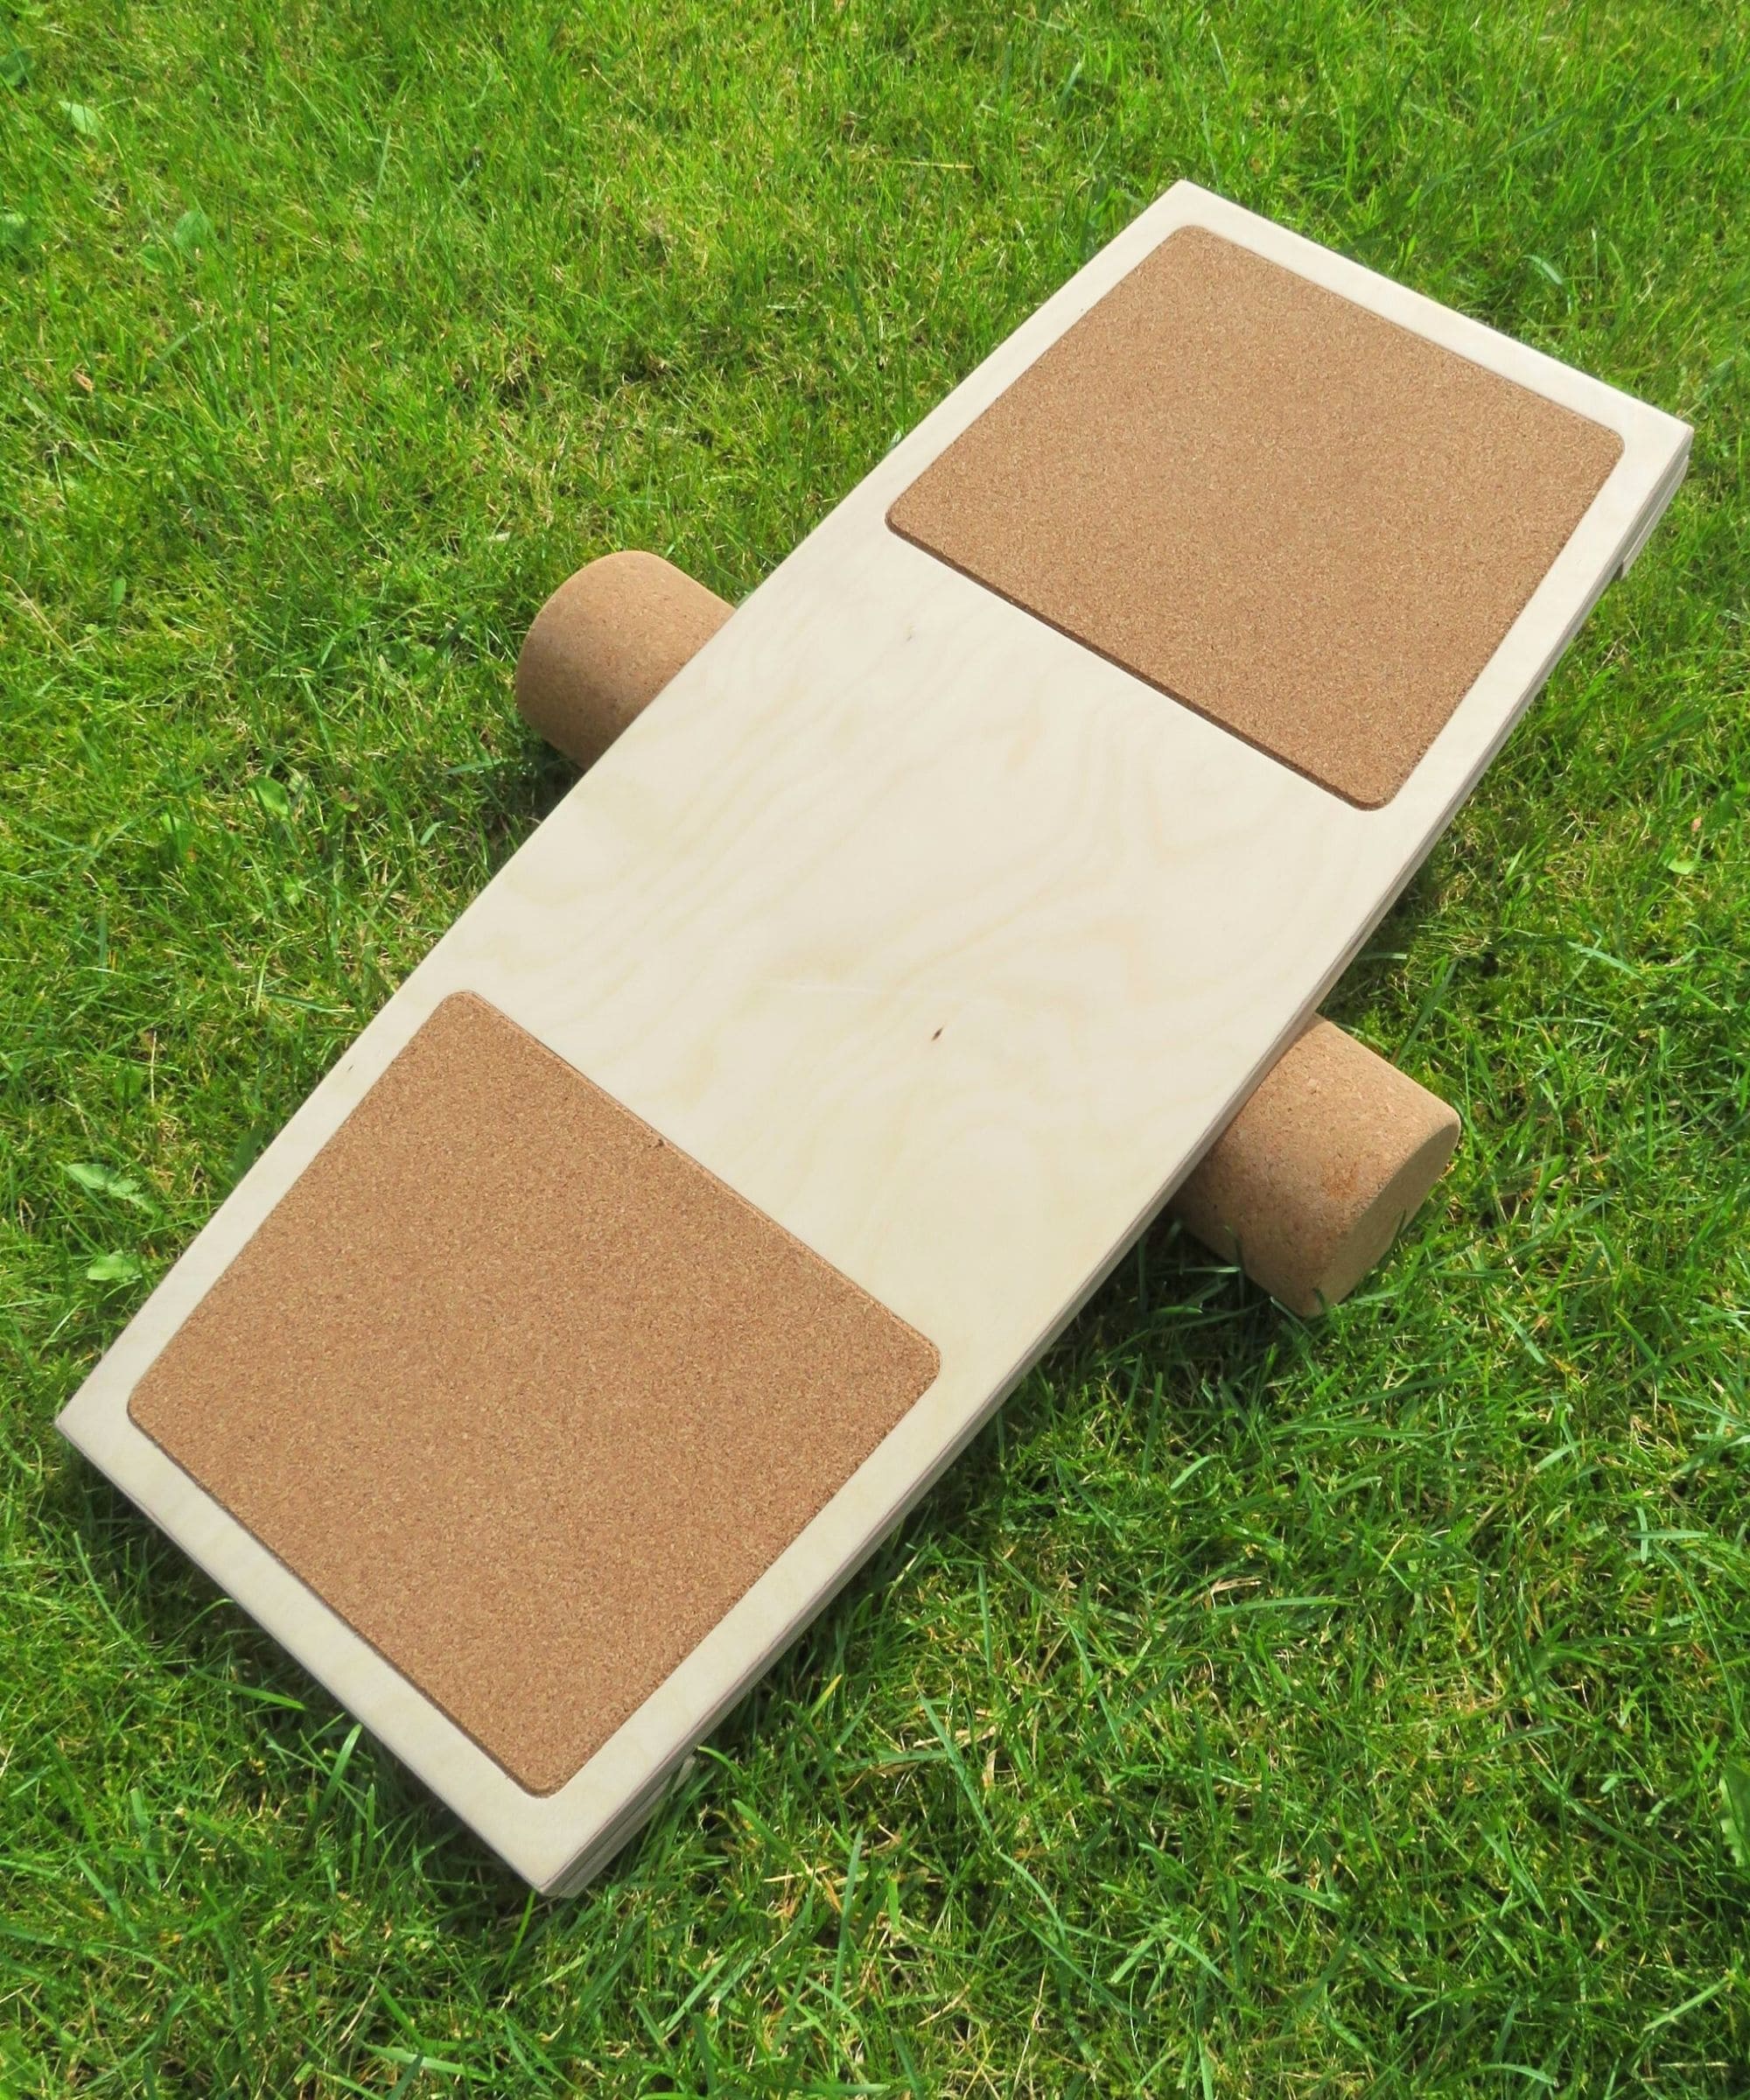 Balance Board mit Korkpads inklusive Korkrolle auf Rasen